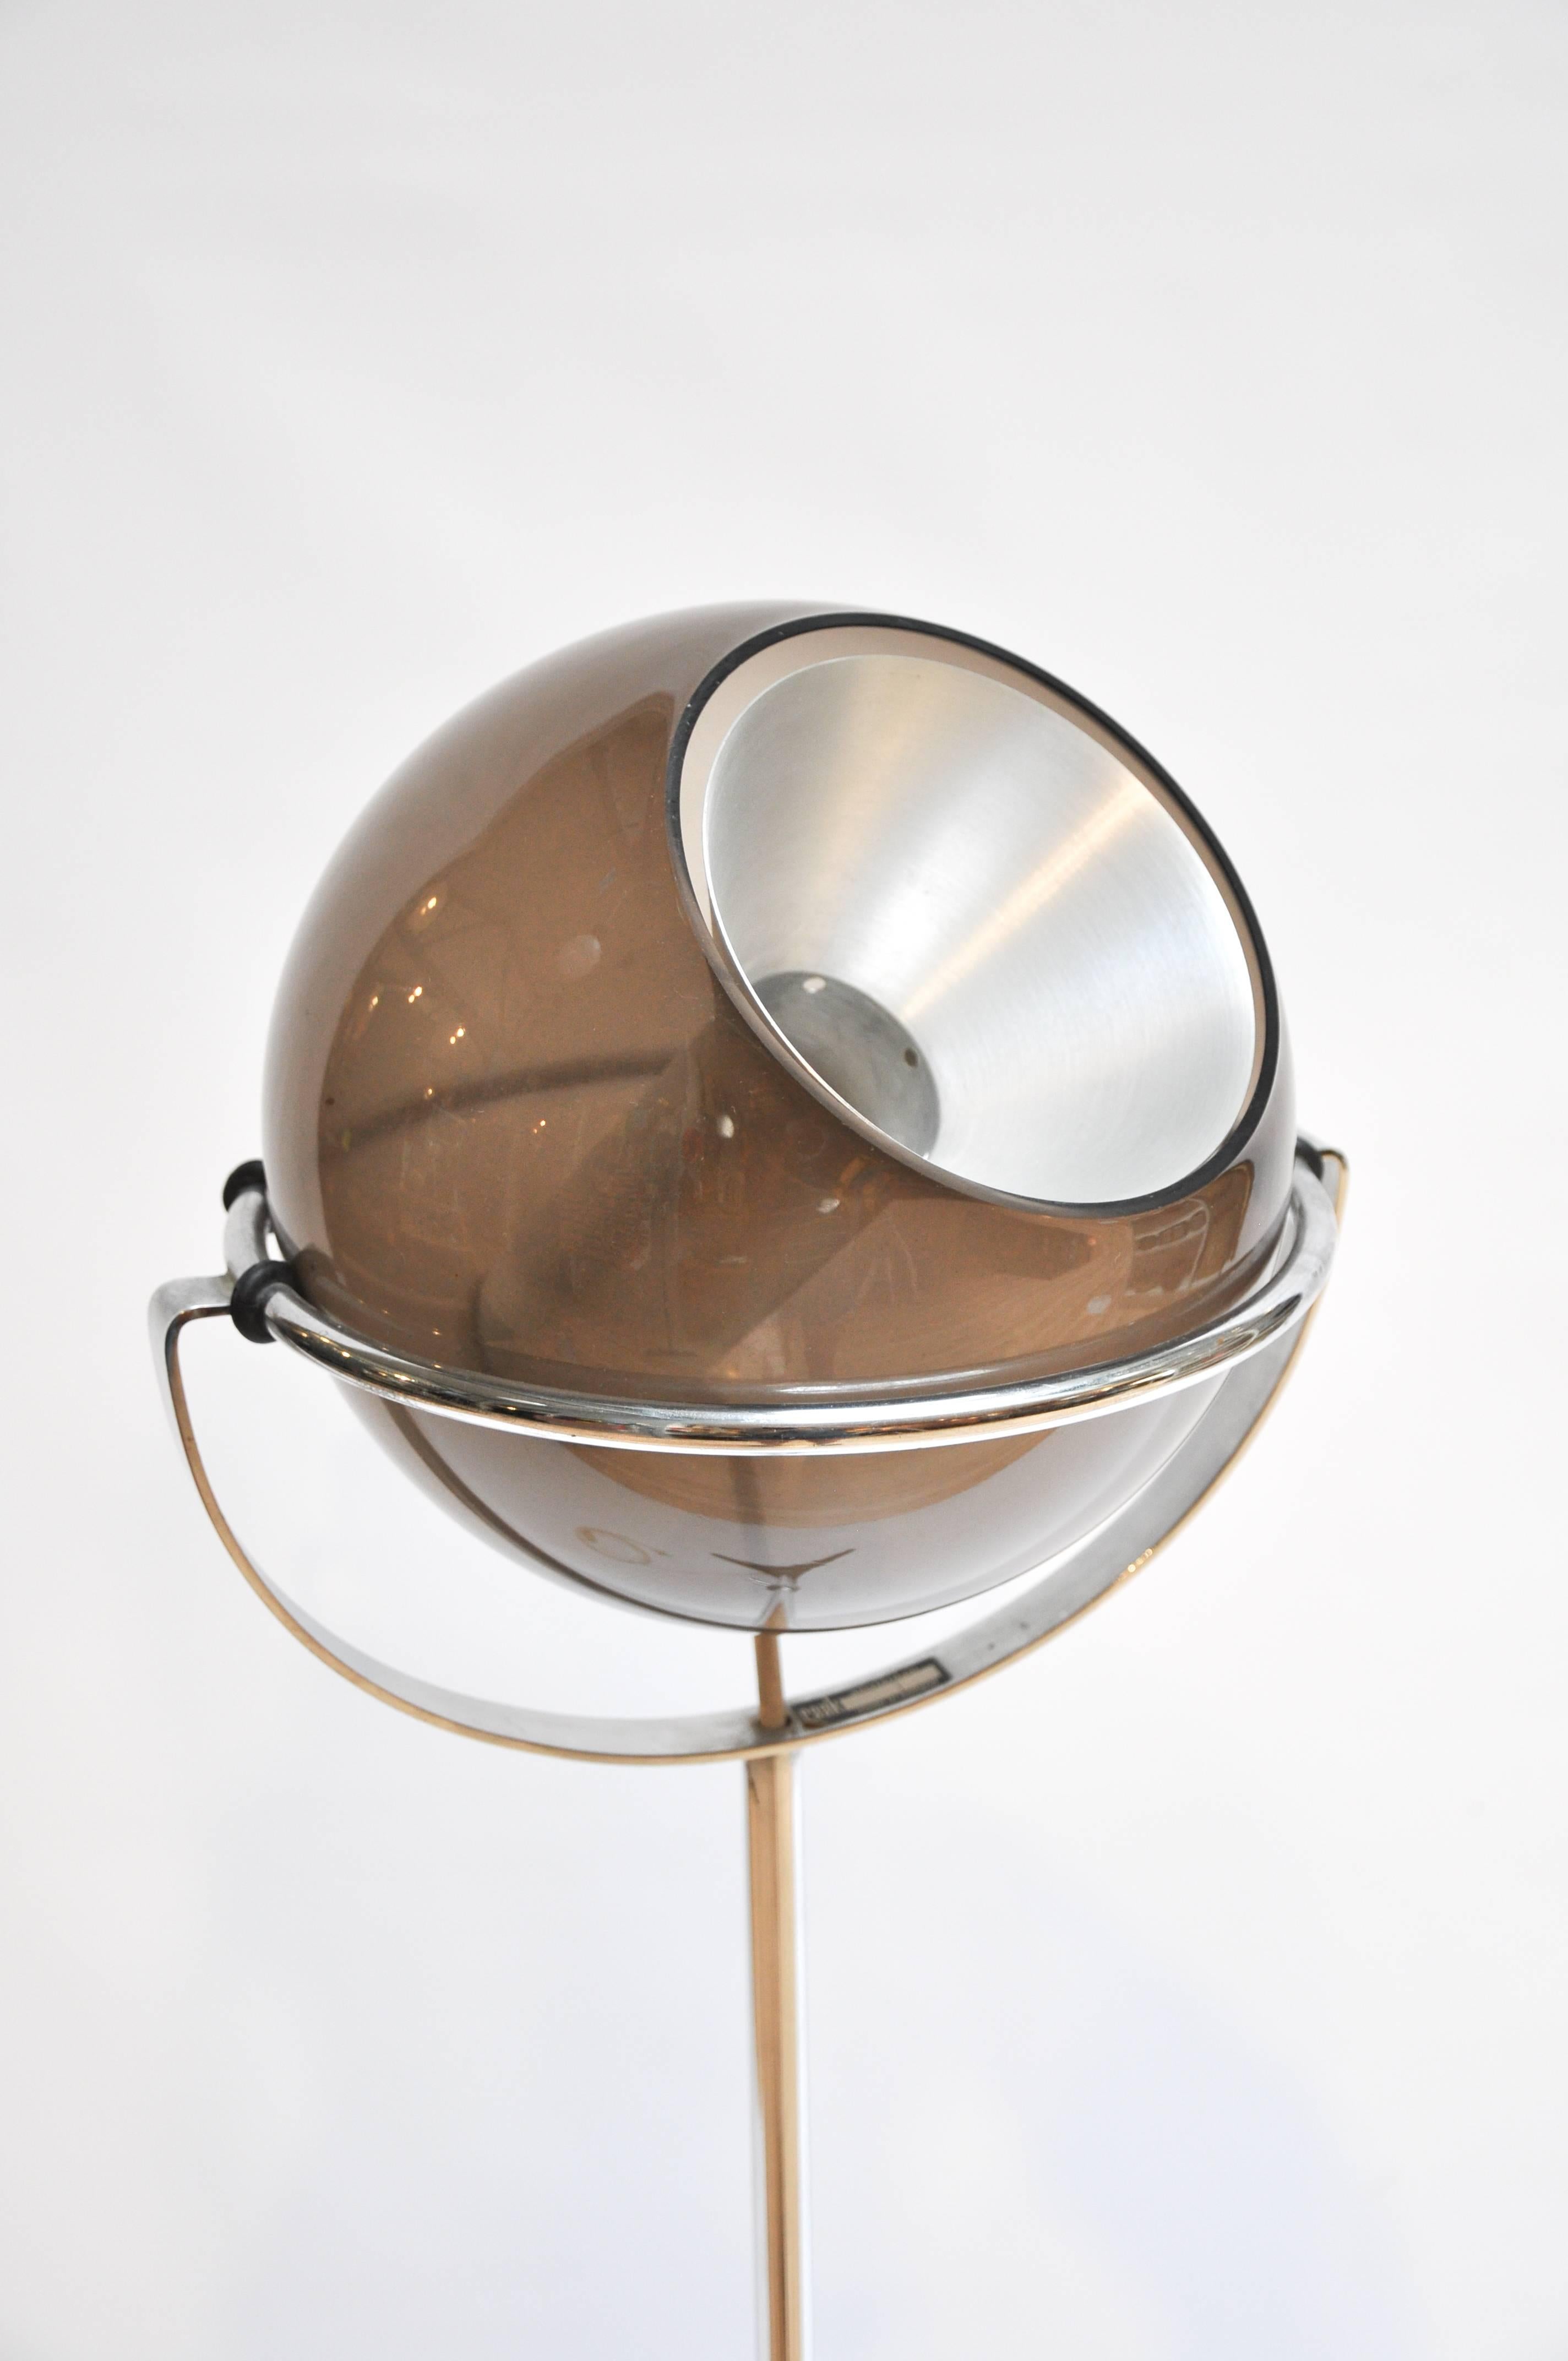 1960s adjustable globe floor lamp designed by Frank Ligtelijn for RAAK Amsterdam. Stamped 